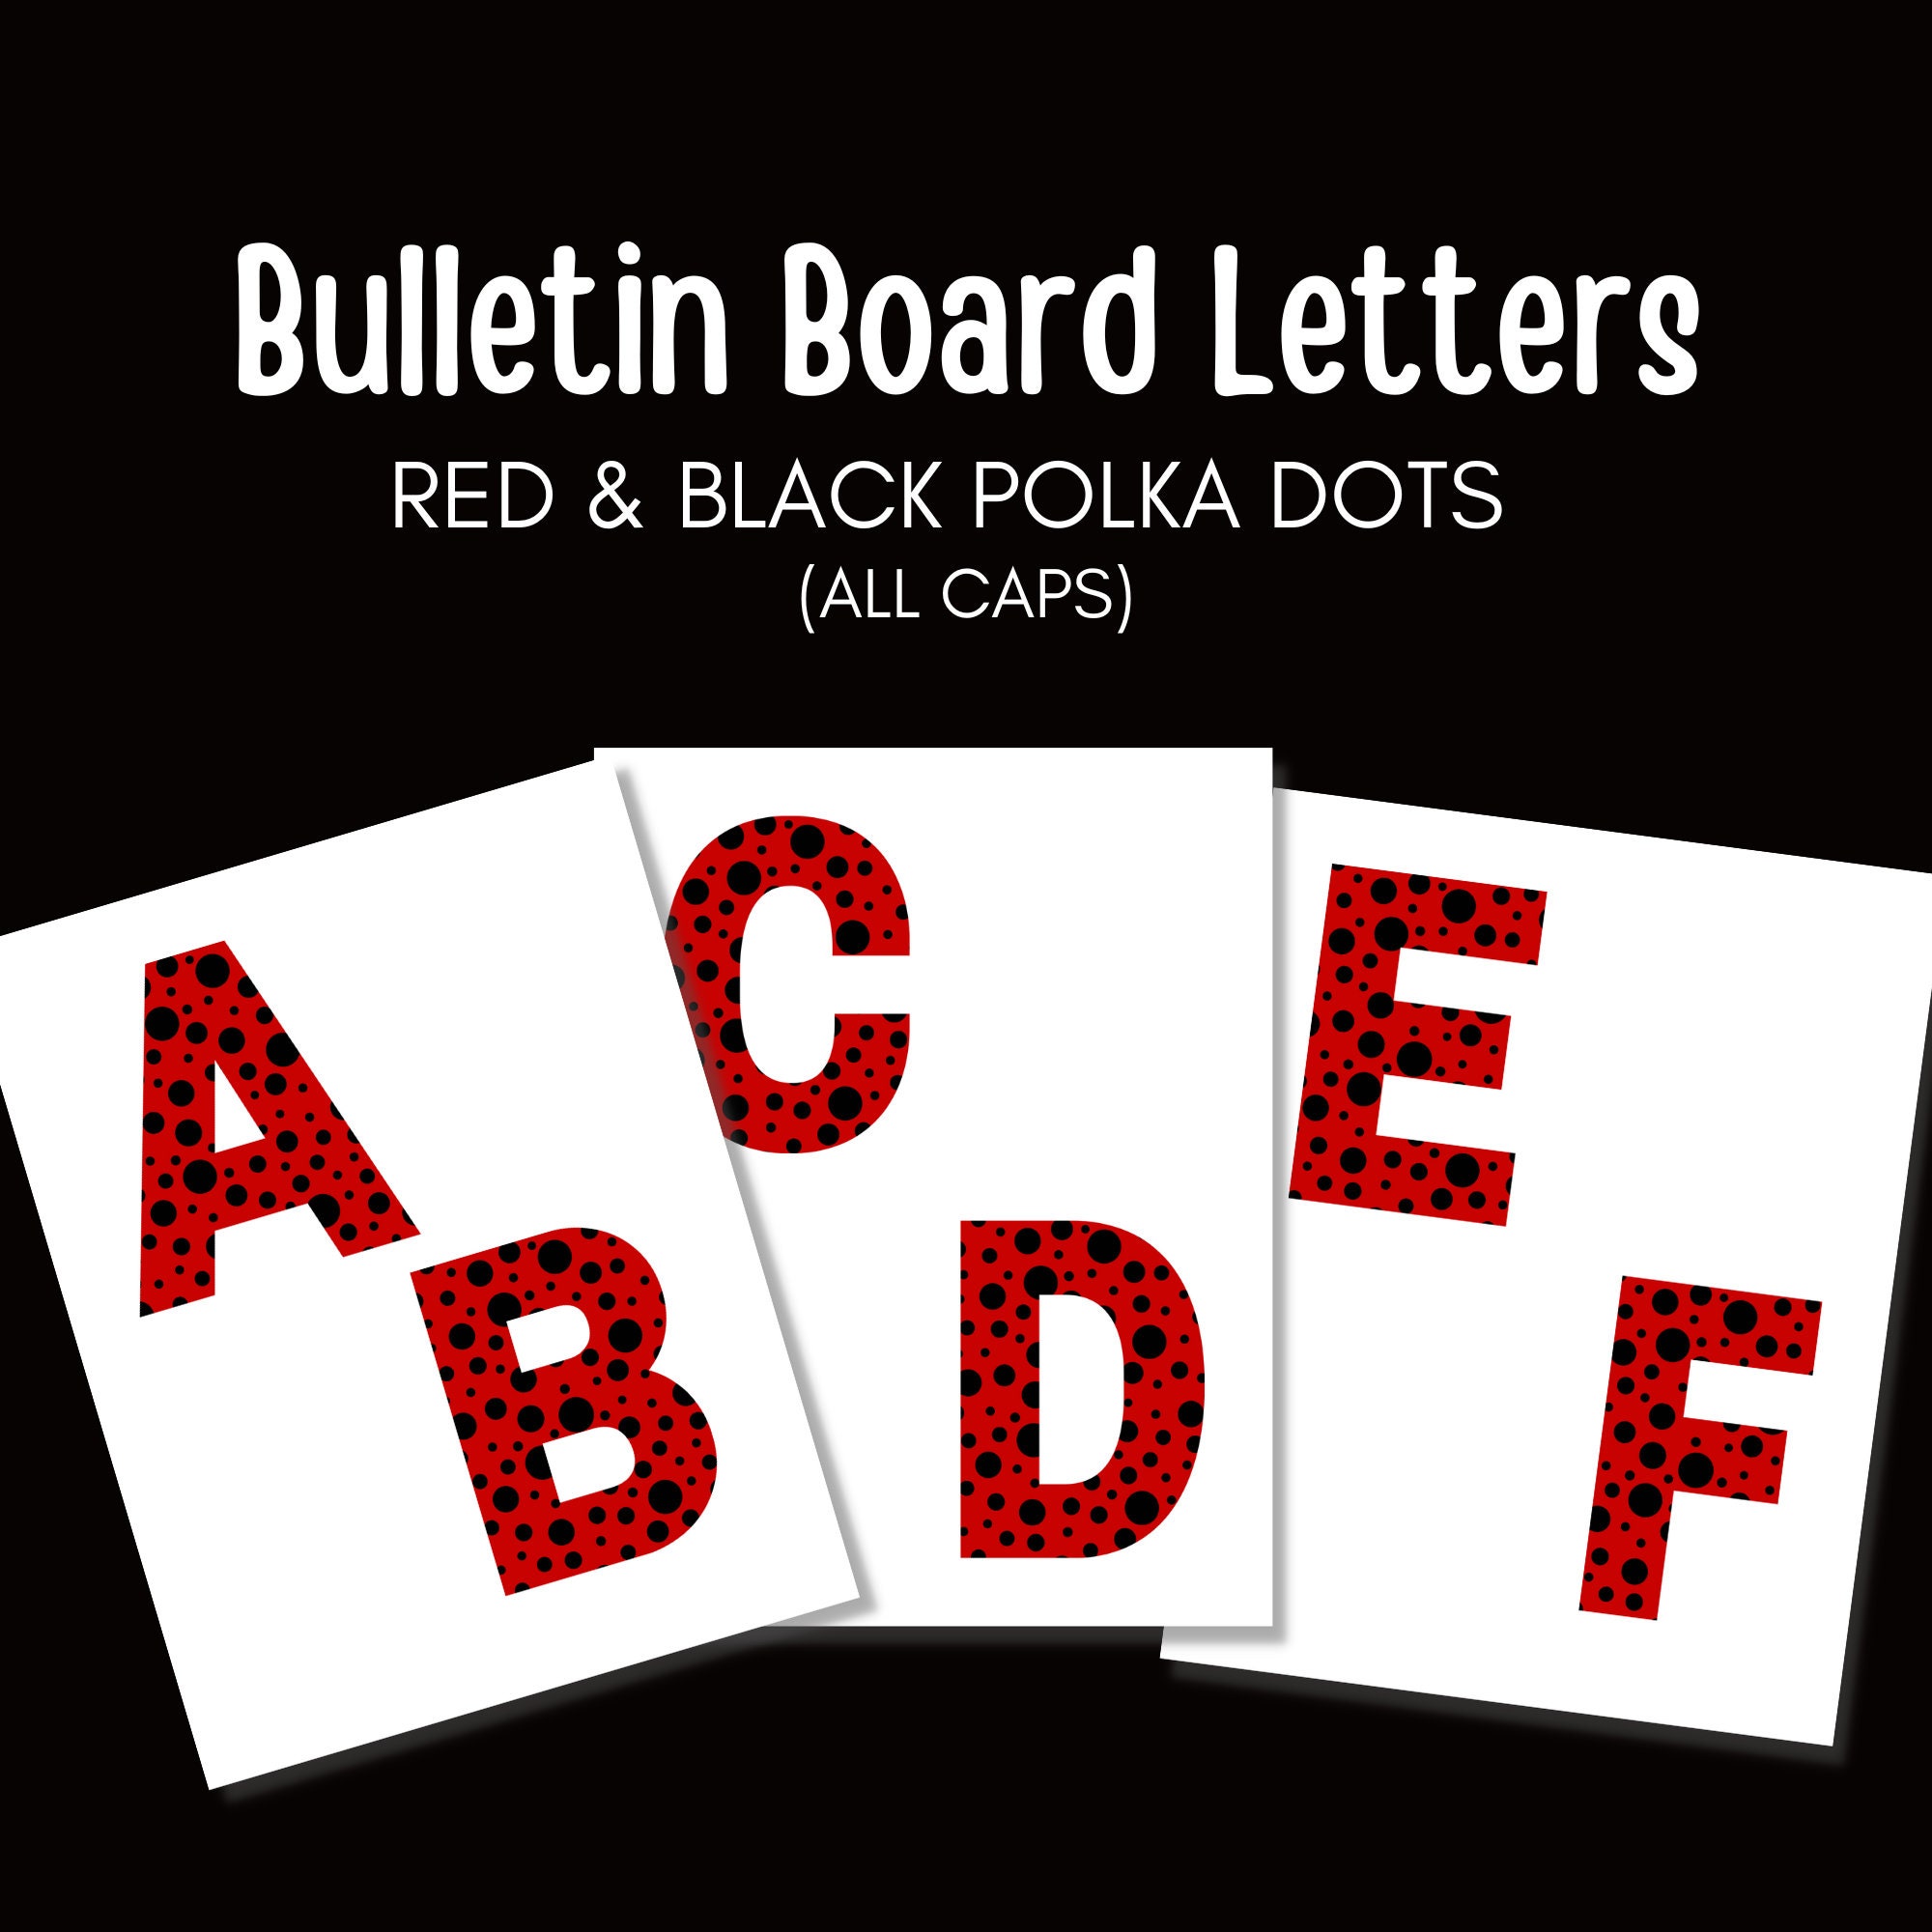 Bulletin Board Letters - Big Bright Polka Dot Letters